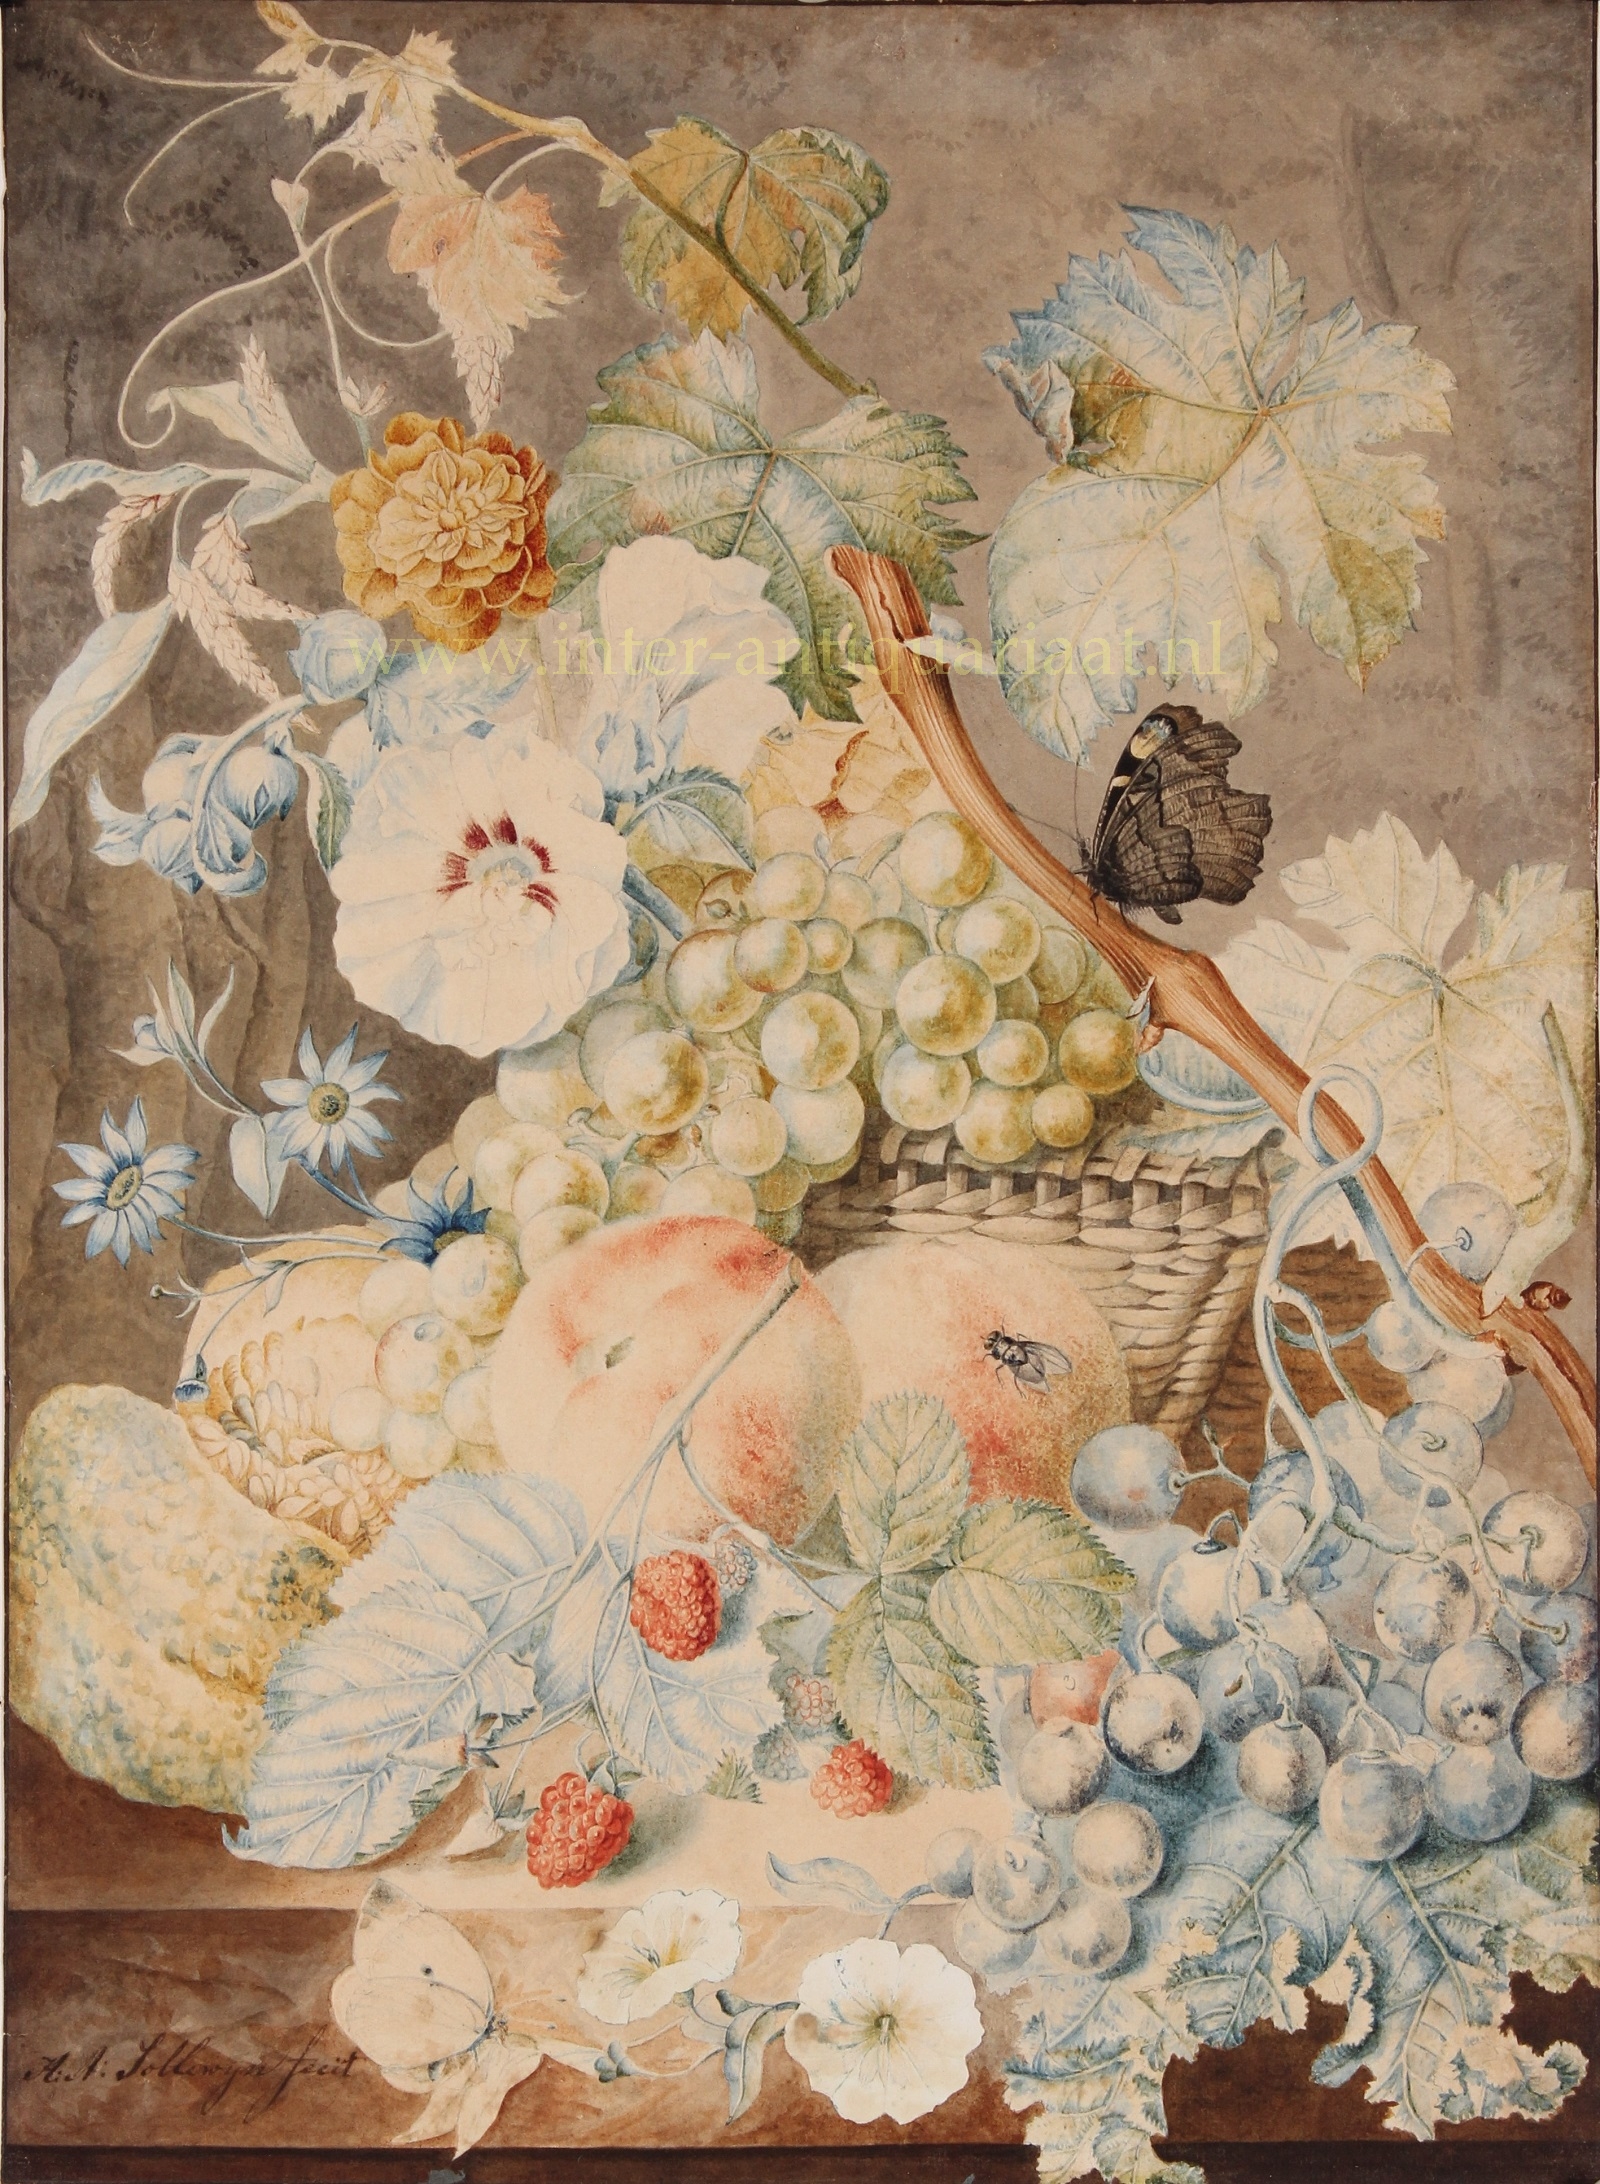  - Fruit still life - Hendrina Sollewijn, 1783-1863